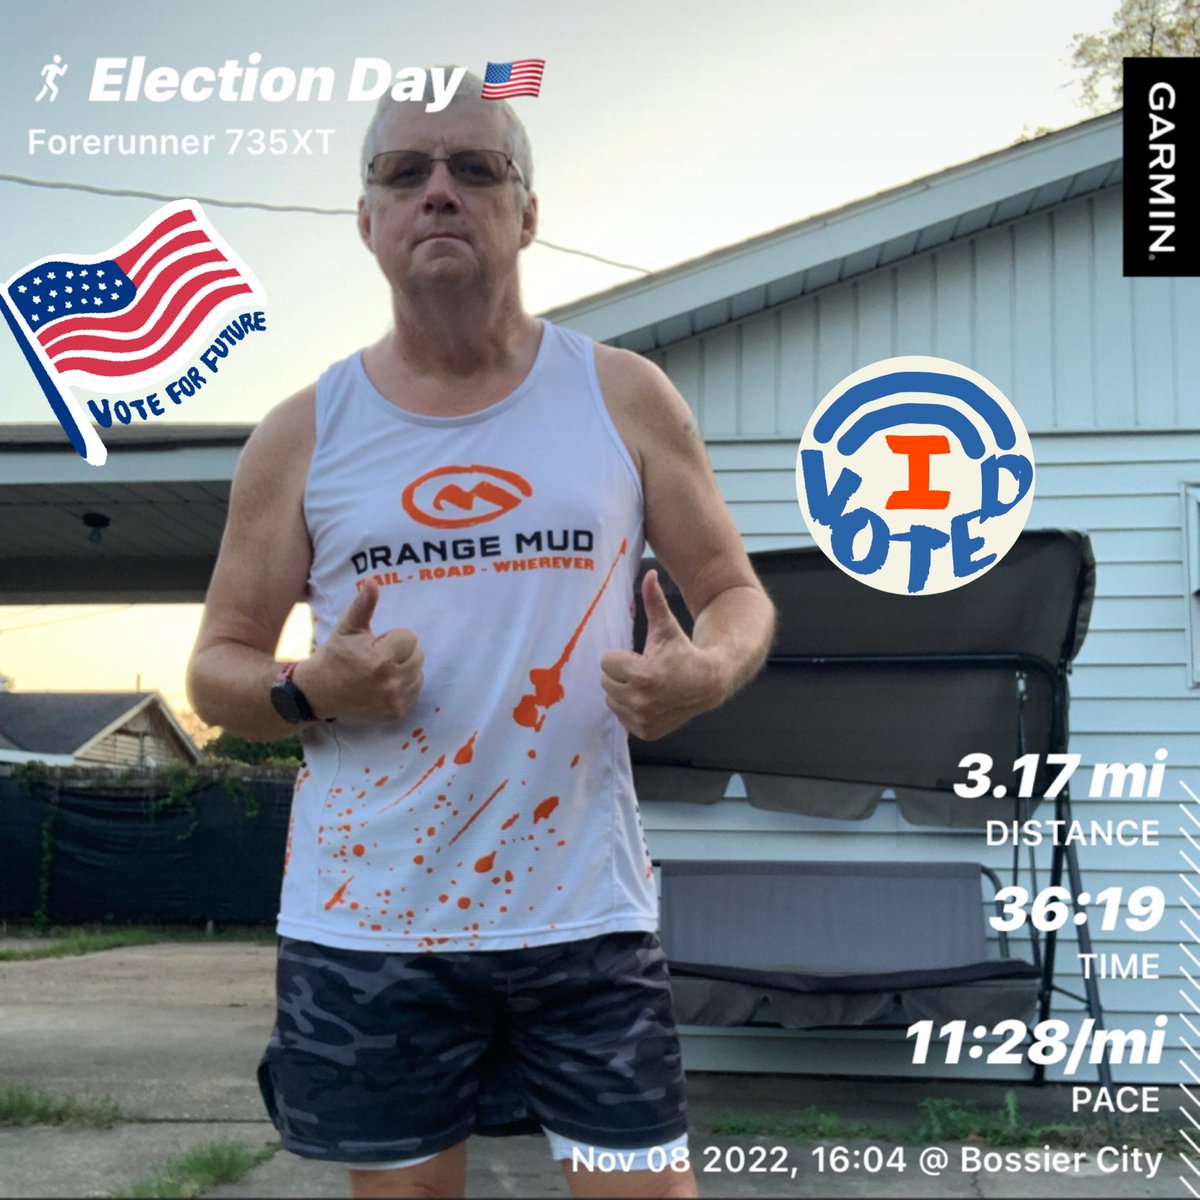 Quick slow 5:1 pace. 

#healthybodyhealthymind #runningismytherapy #finishedwithaheartbeat #veteransuicideprevention #trailroadwherever #orangemudambassador #orangemud #ElectionDay #Vote 🇺🇸